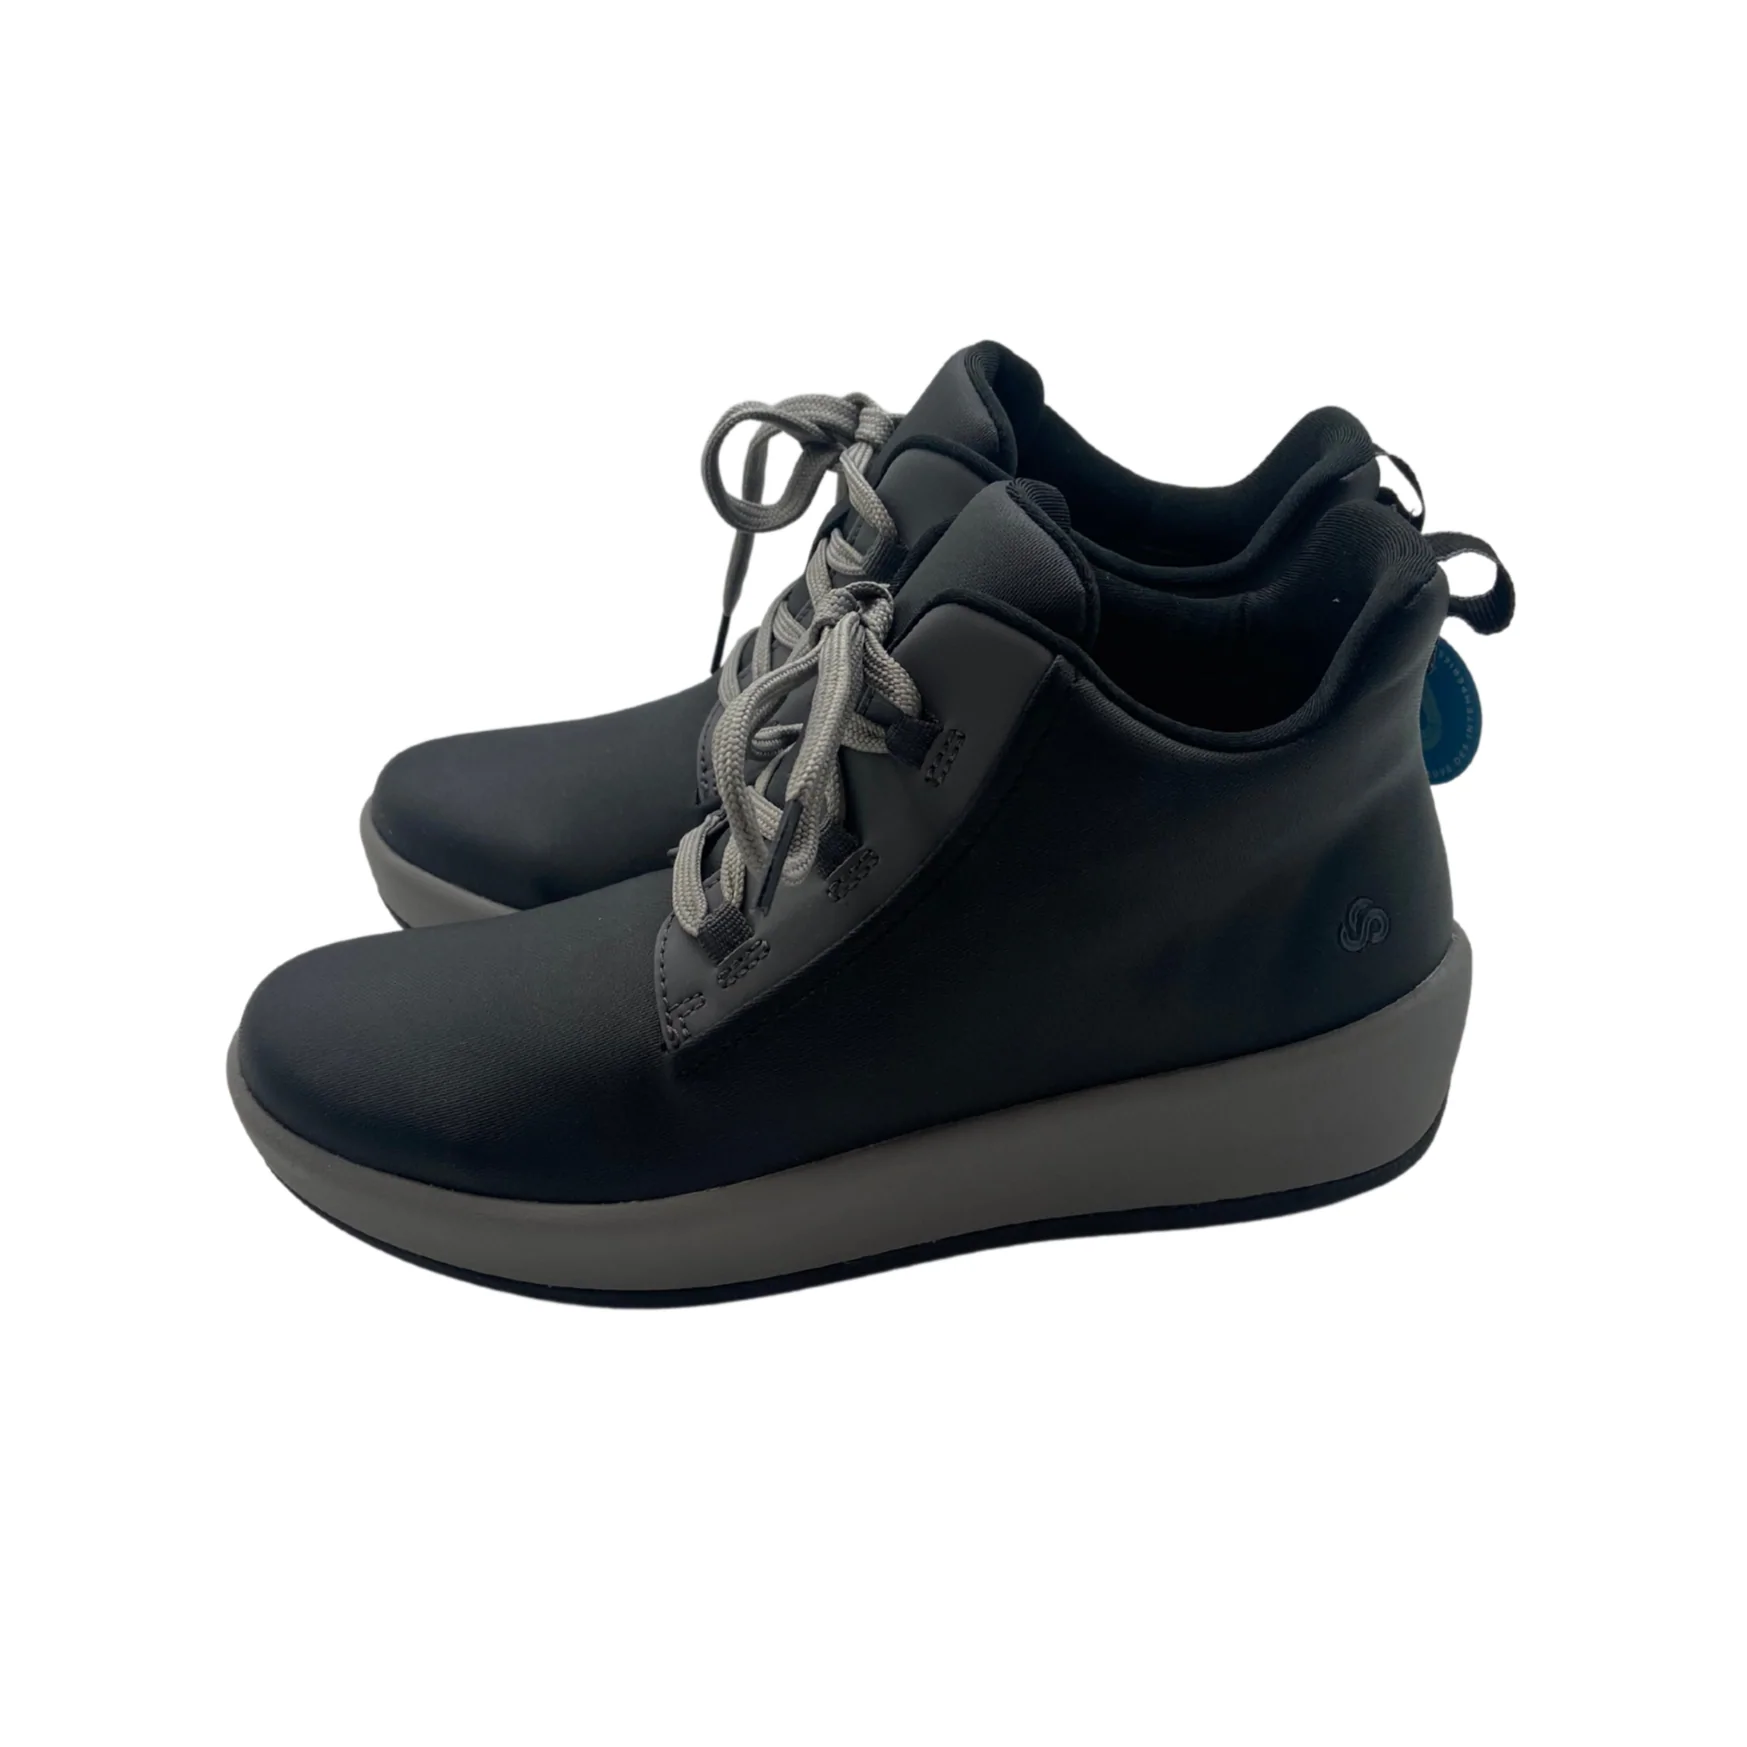 Clarks: Cloudsteppers /Men's Shoes / Black / Grey / Waterproof / Size 7